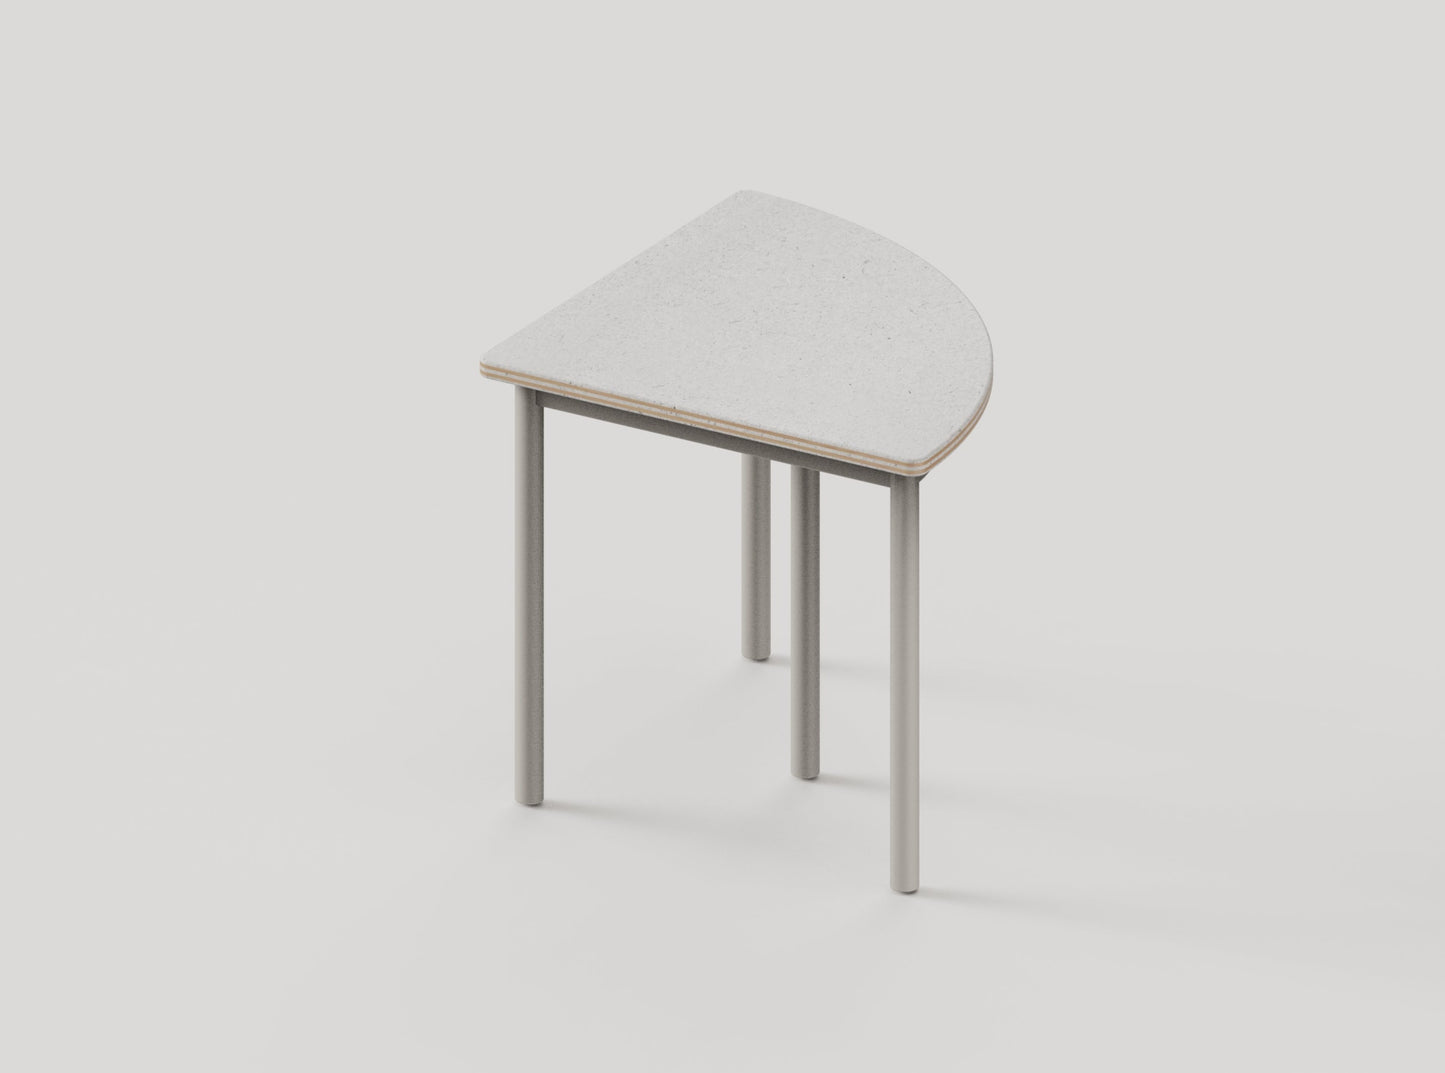 Modular Table